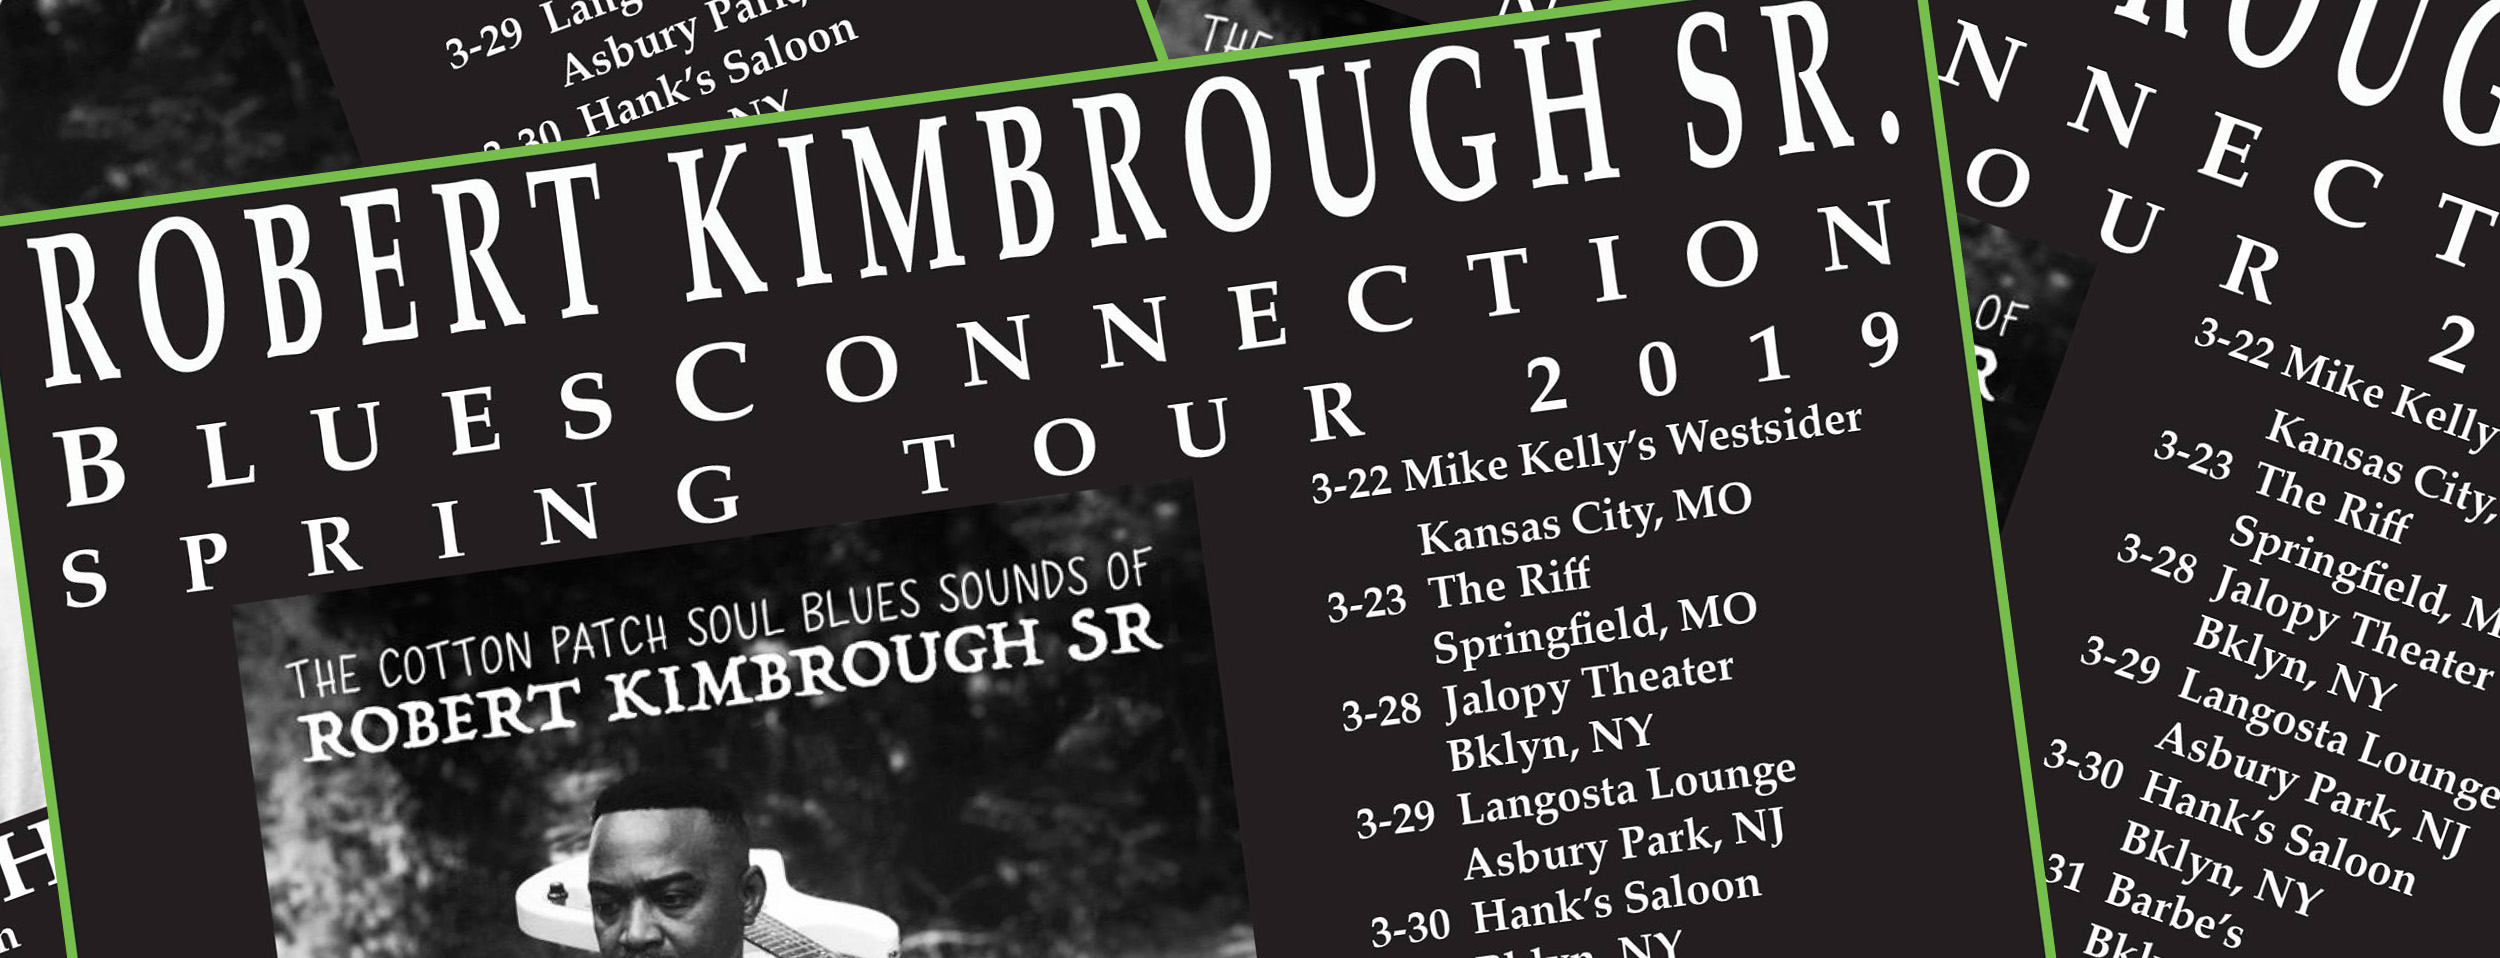 Robert Kimbrough Sr Blues Connection Spring 2019 Tour